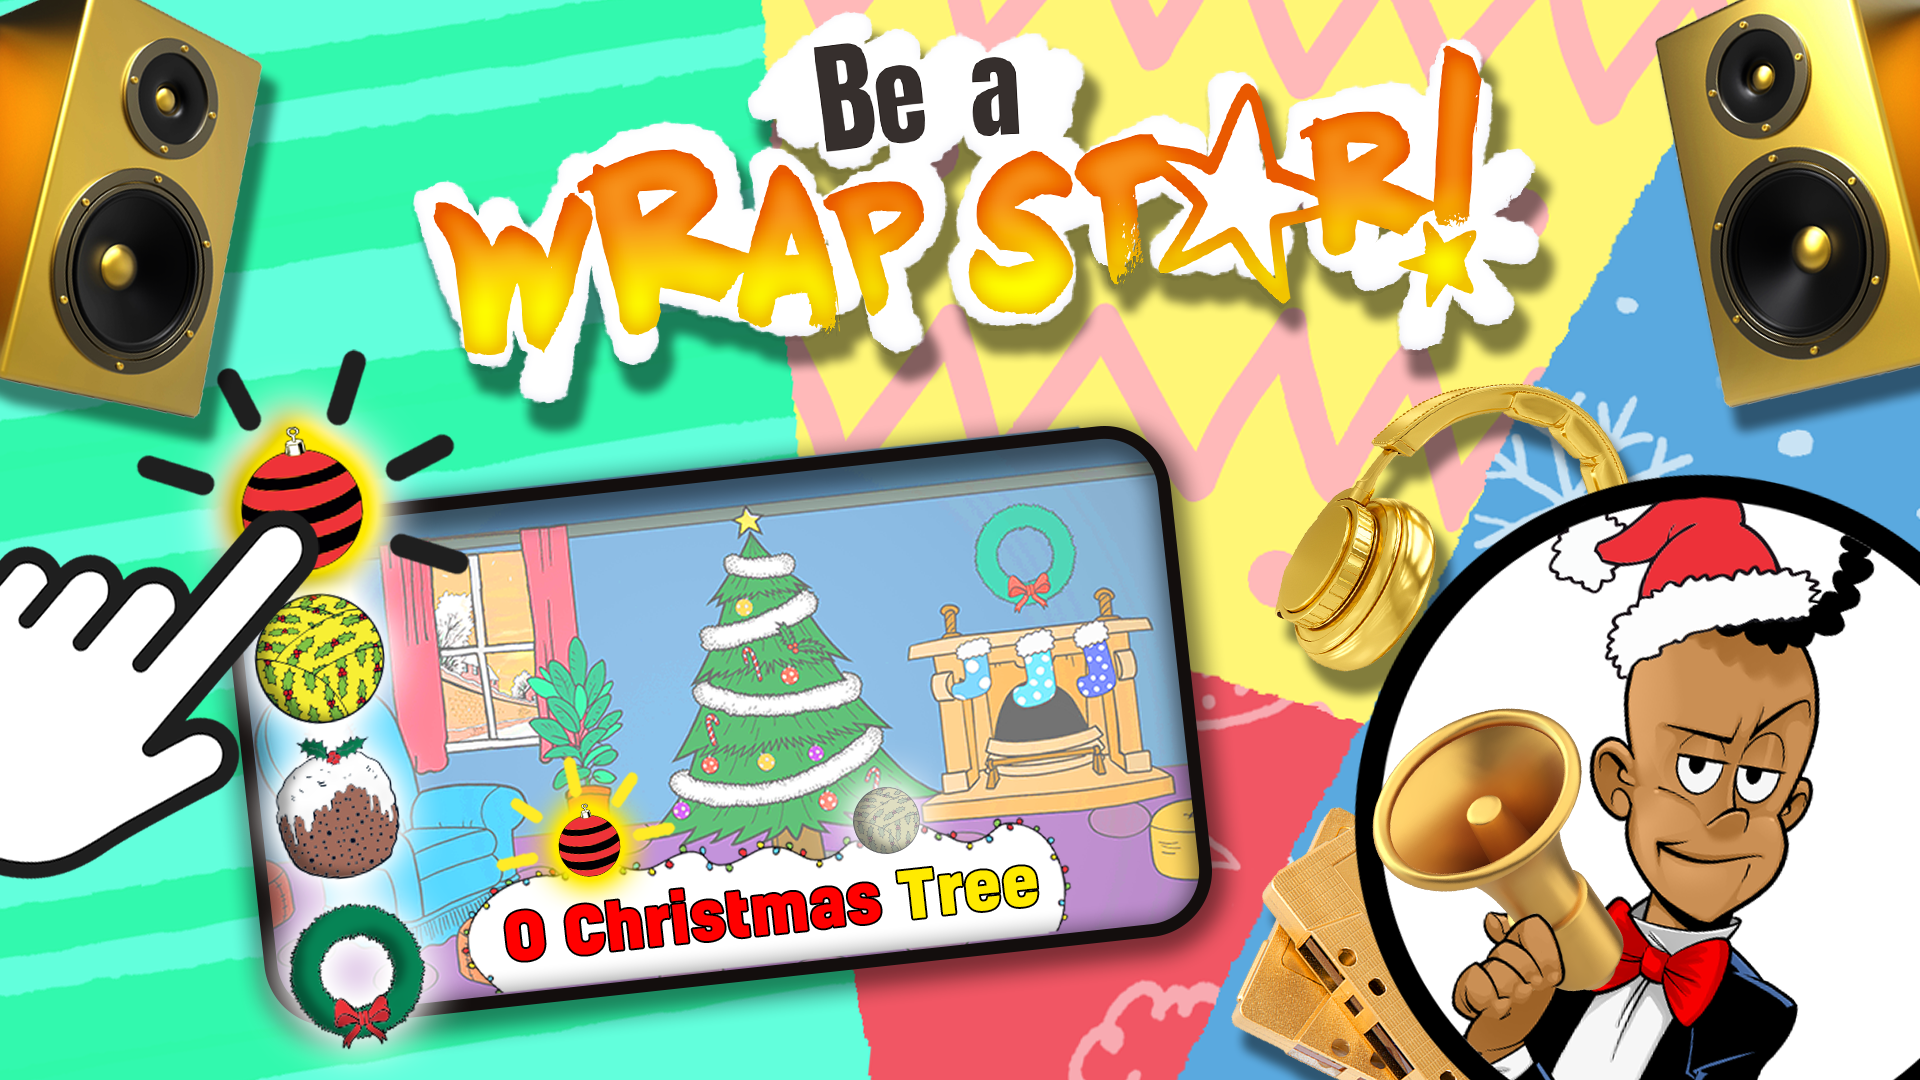 Play the Wrap Star Rhythm game!